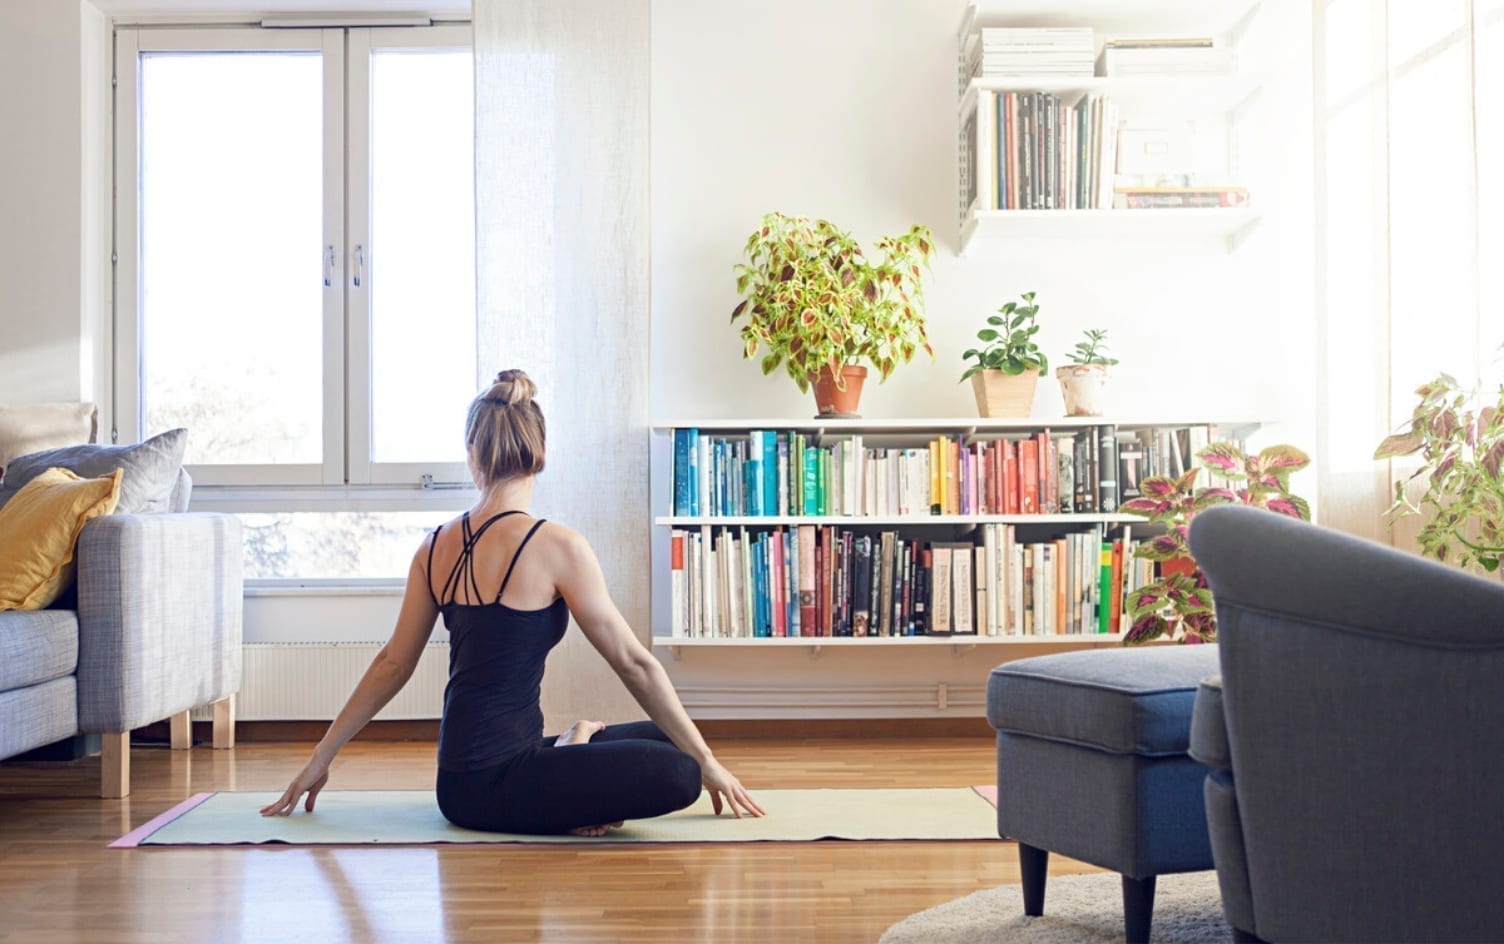 https://blog.myfitnesspal.com/wp-content/uploads/2020/03/How-to-Set-up-a-Home-Yoga-Studio.jpg